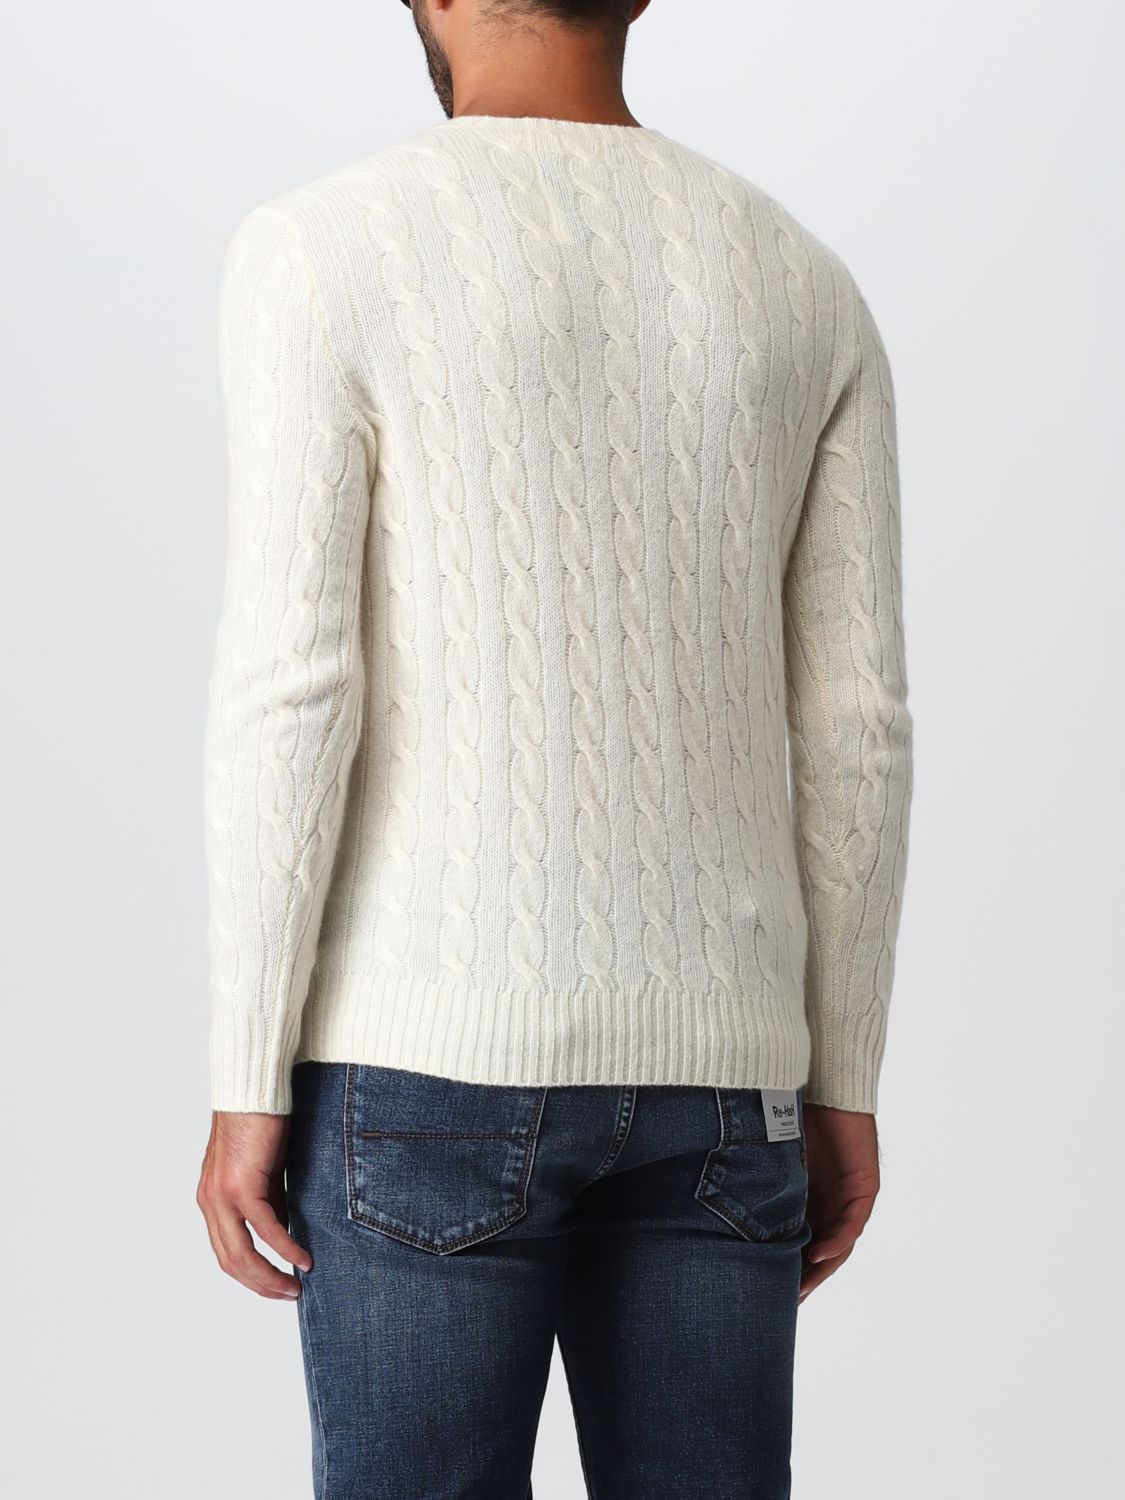 POLO RALPH LAUREN: sweater for man - Cream | Polo Ralph Lauren sweater ...